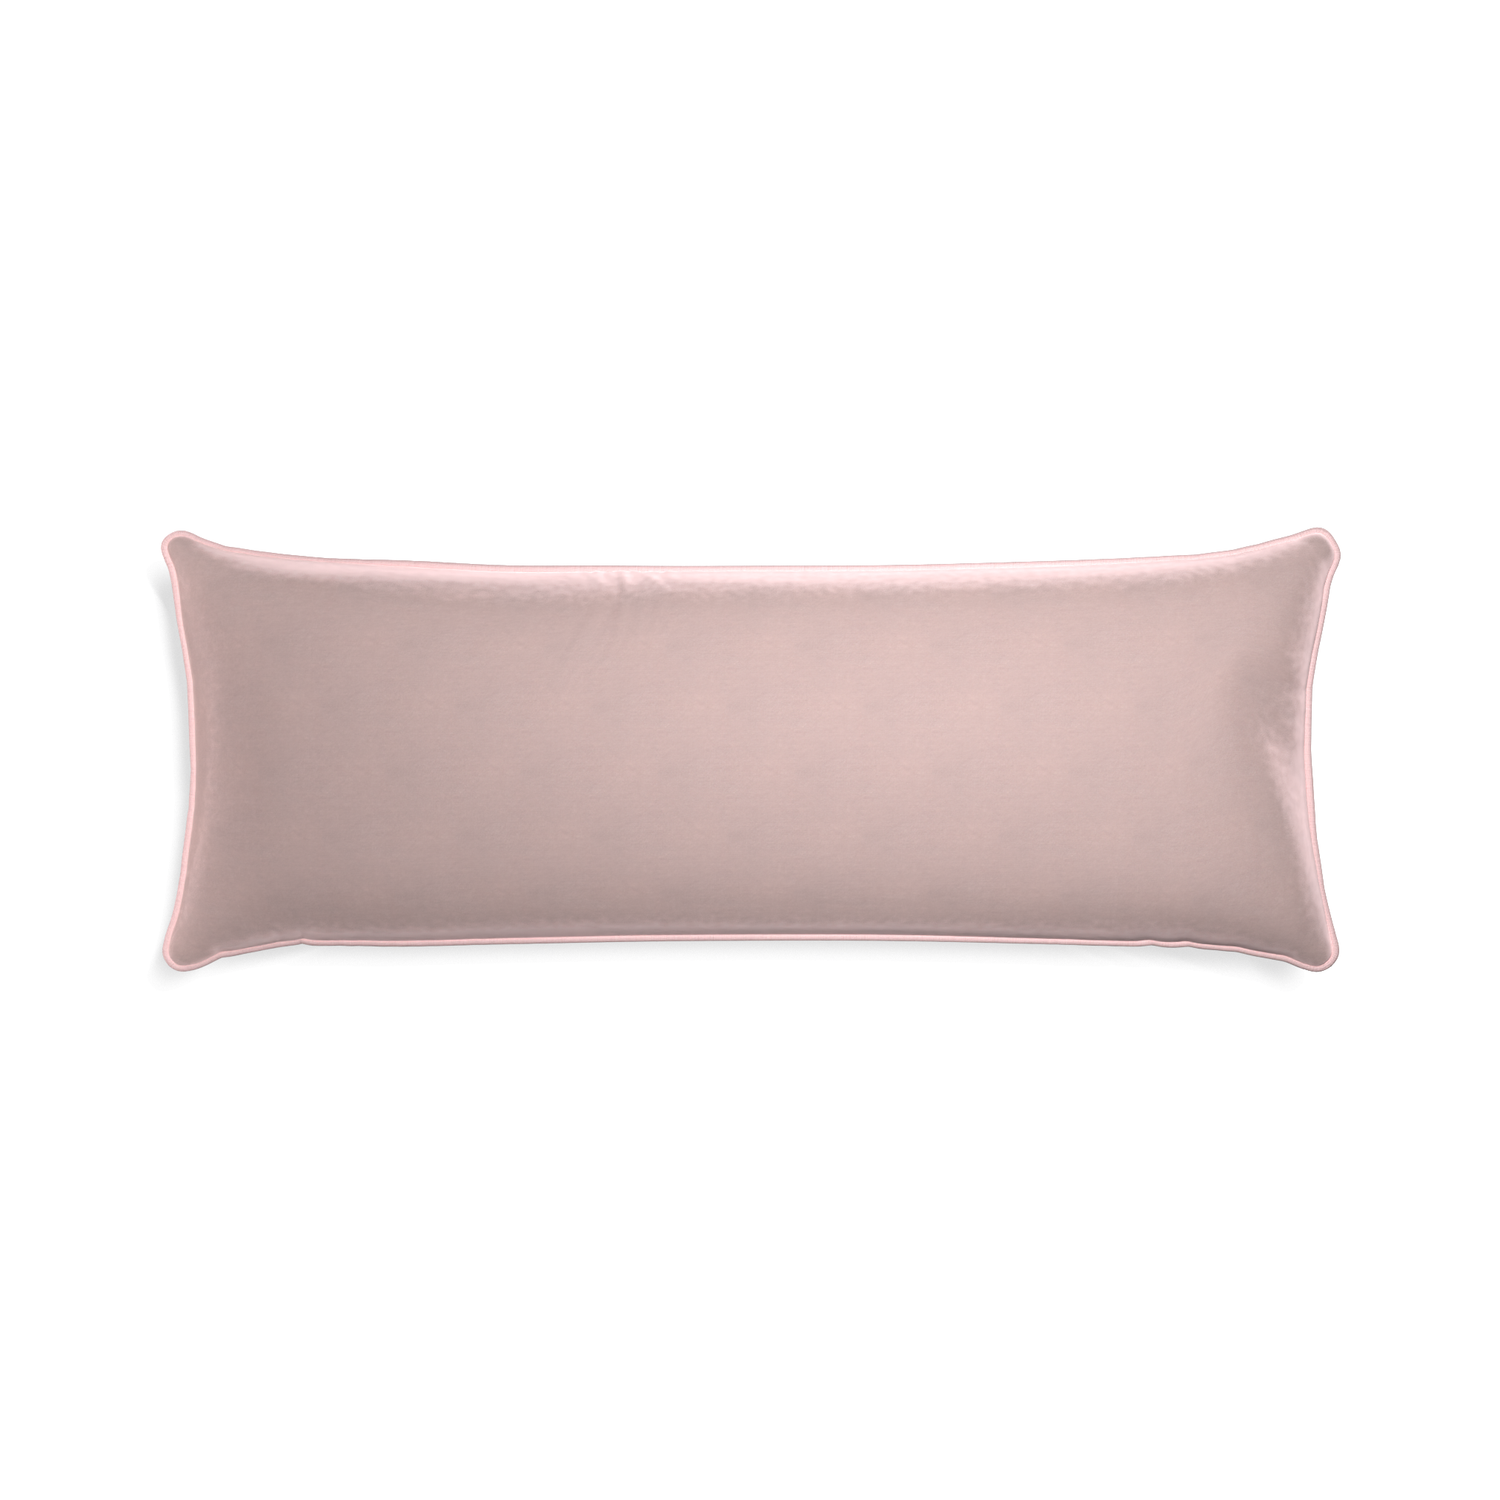 Xl-lumbar rose velvet custom pillow with petal piping on white background